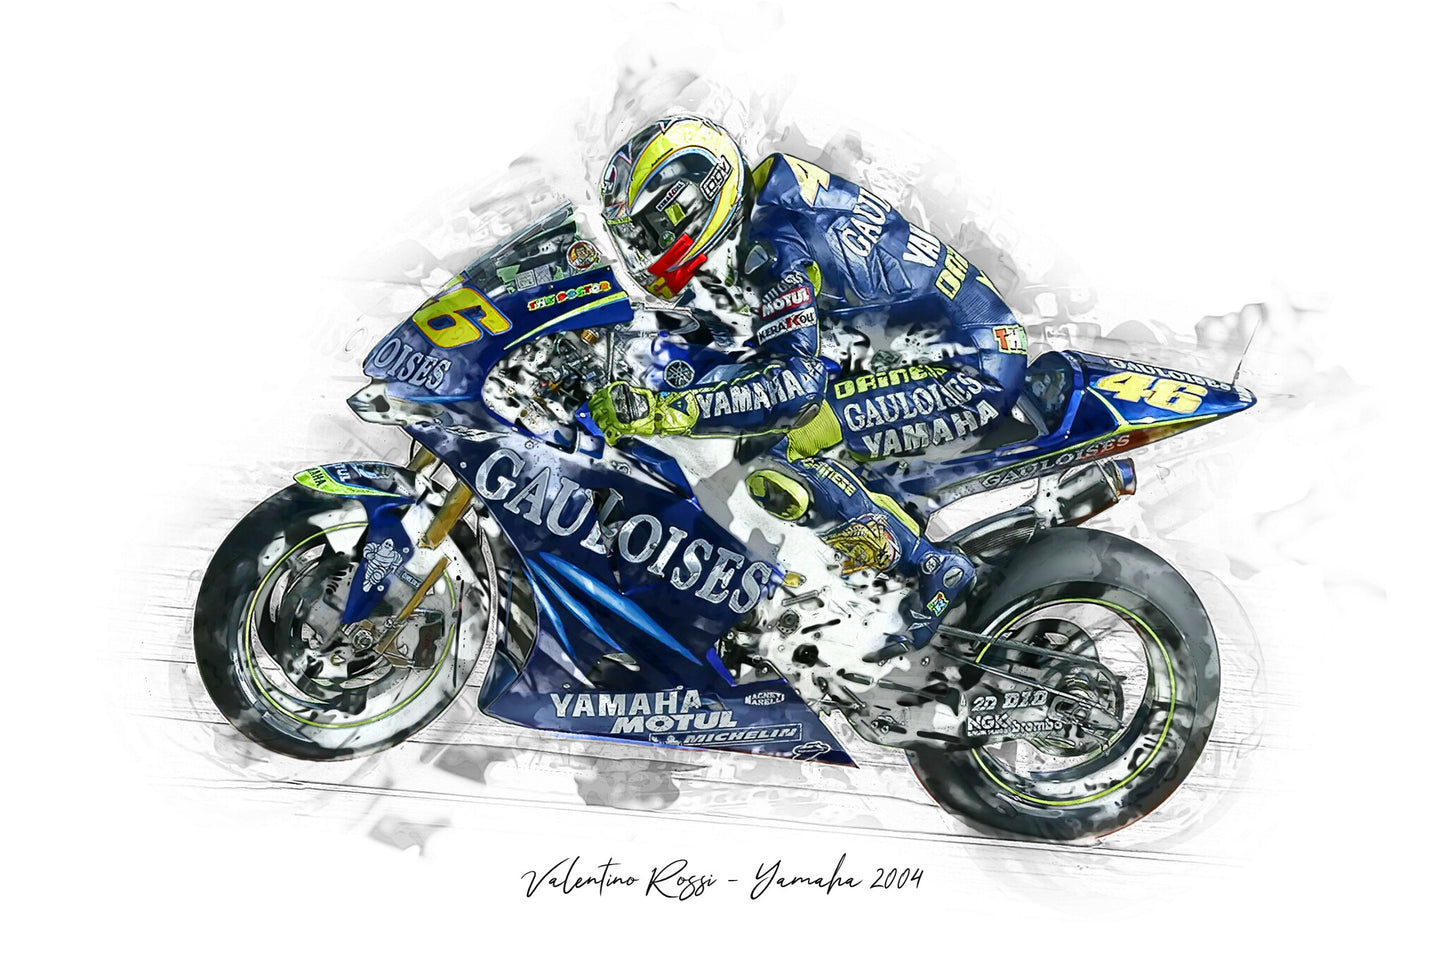 Valentino Rossi - Yamaha 2004 - Kunstdruck gerahmt - 40 x 30  cm